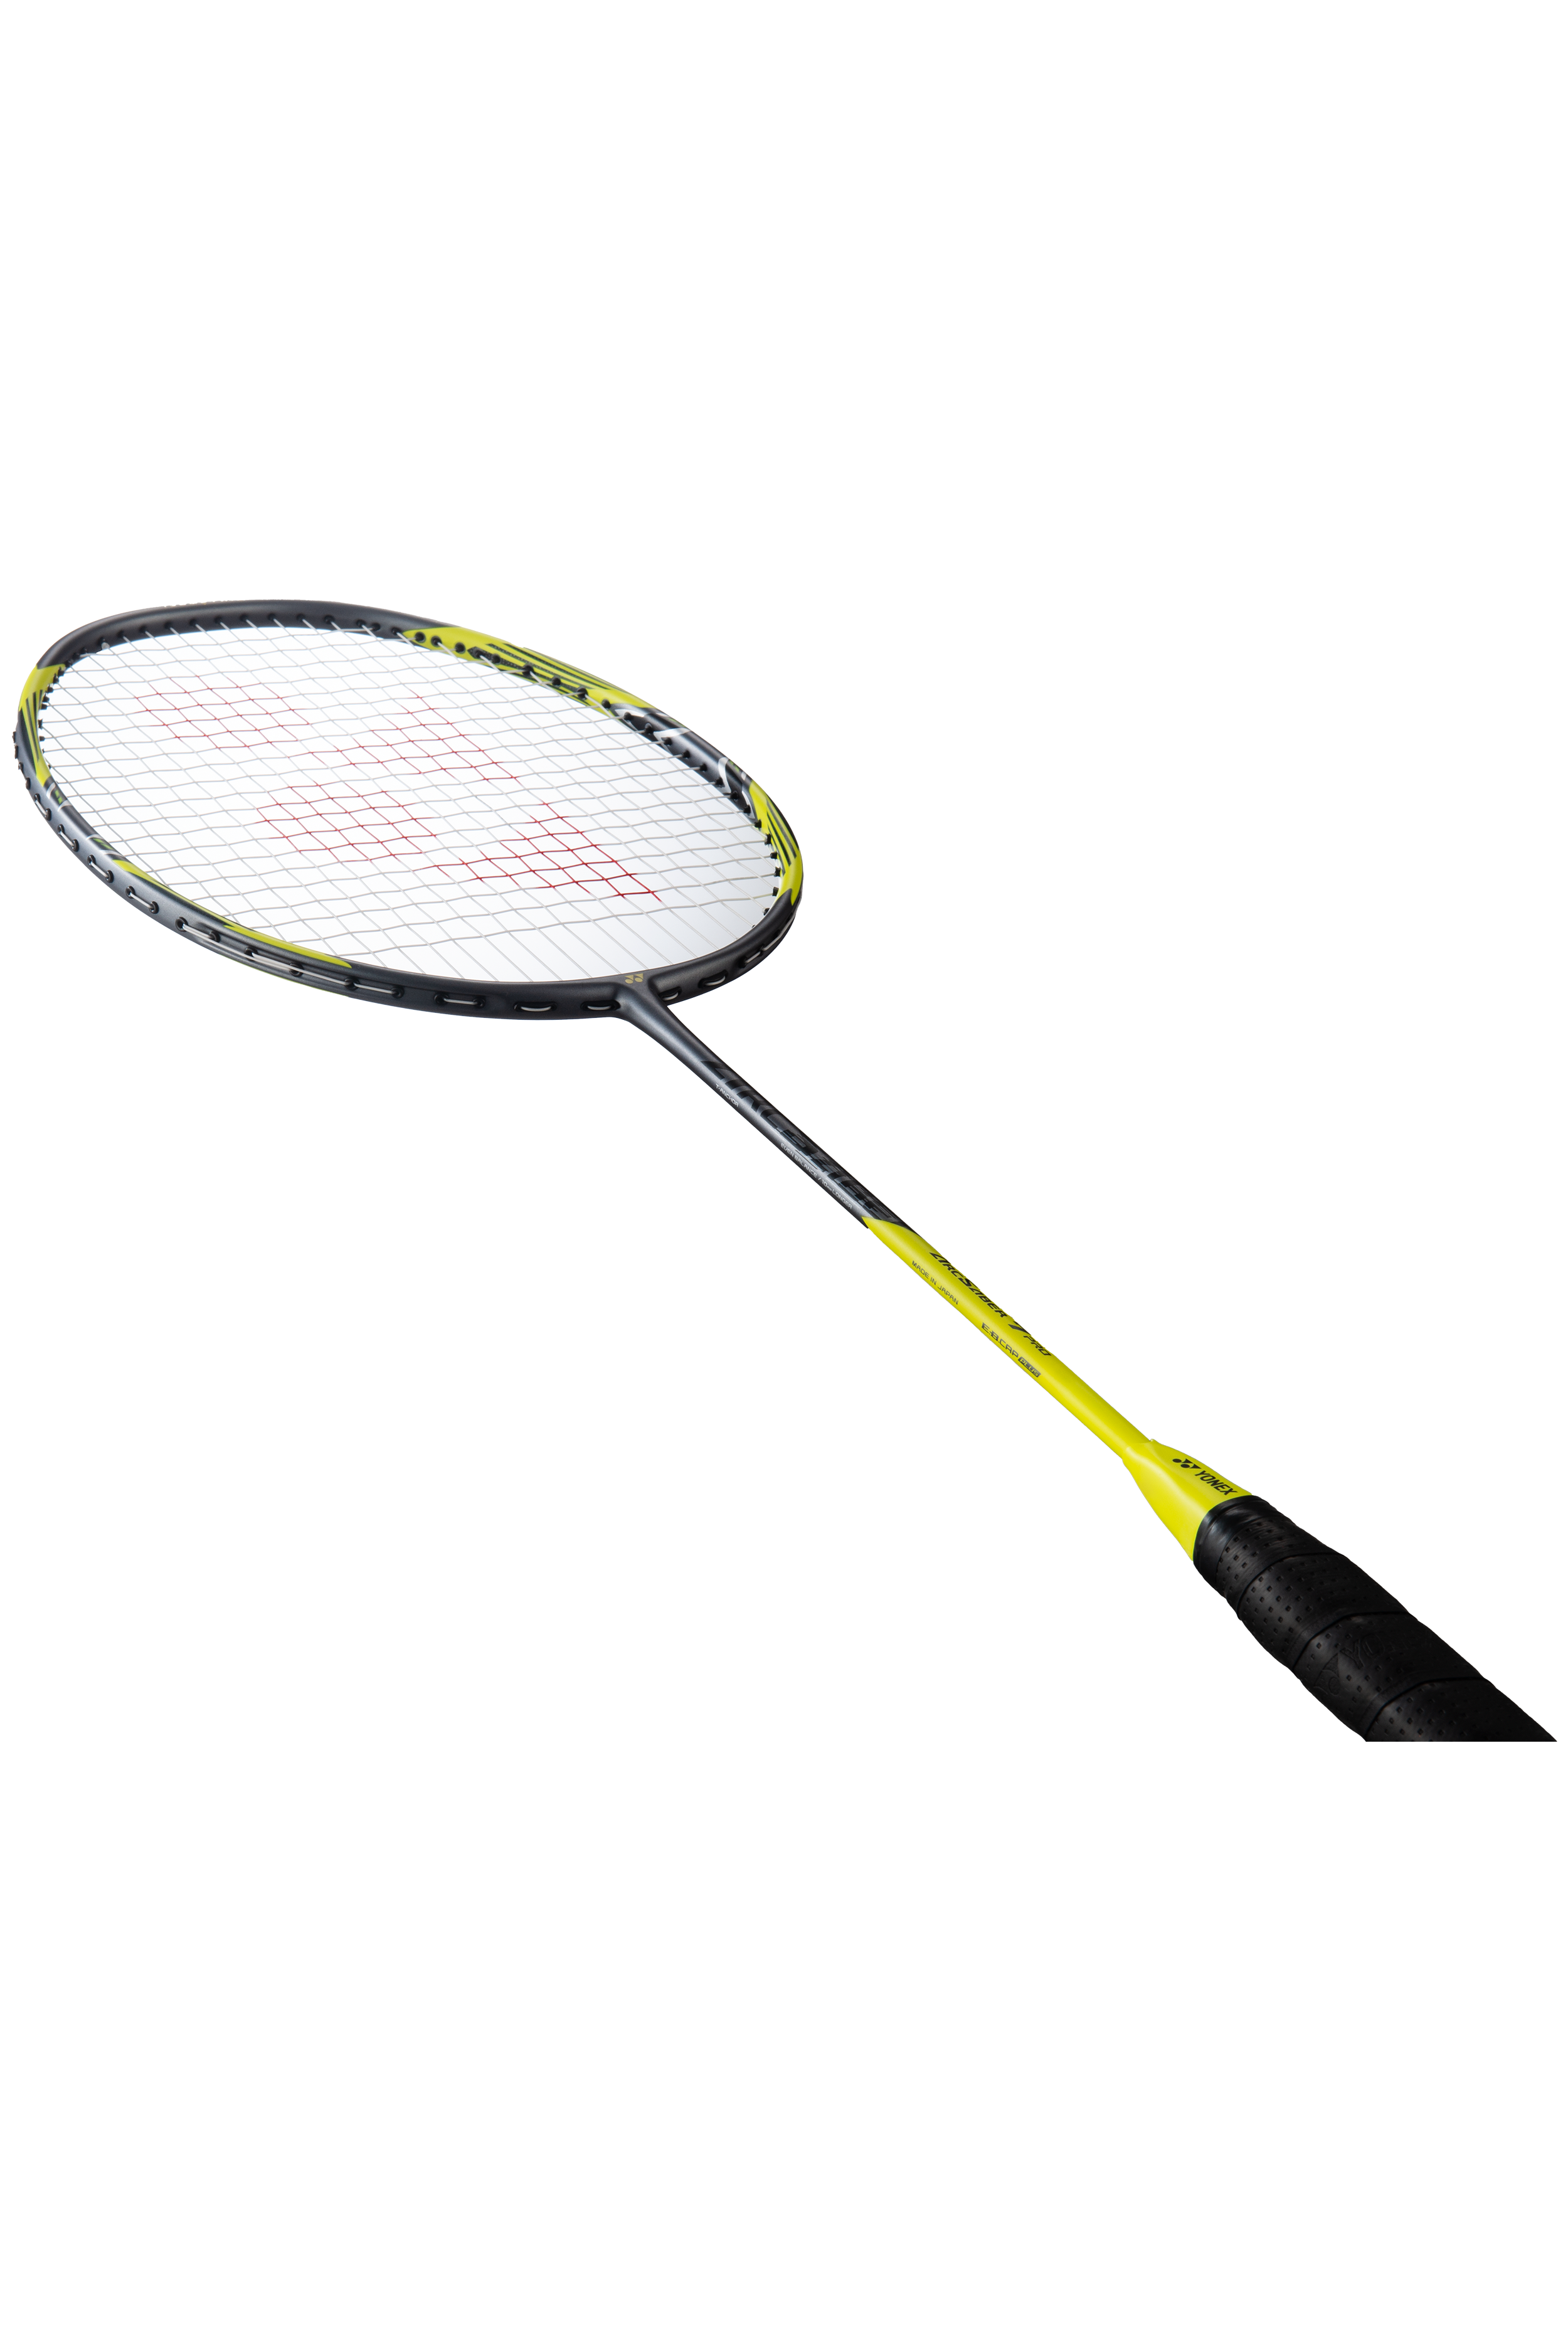 Yonex ArcSaber 7 Pro Badminton Racket | Badminton Avenue